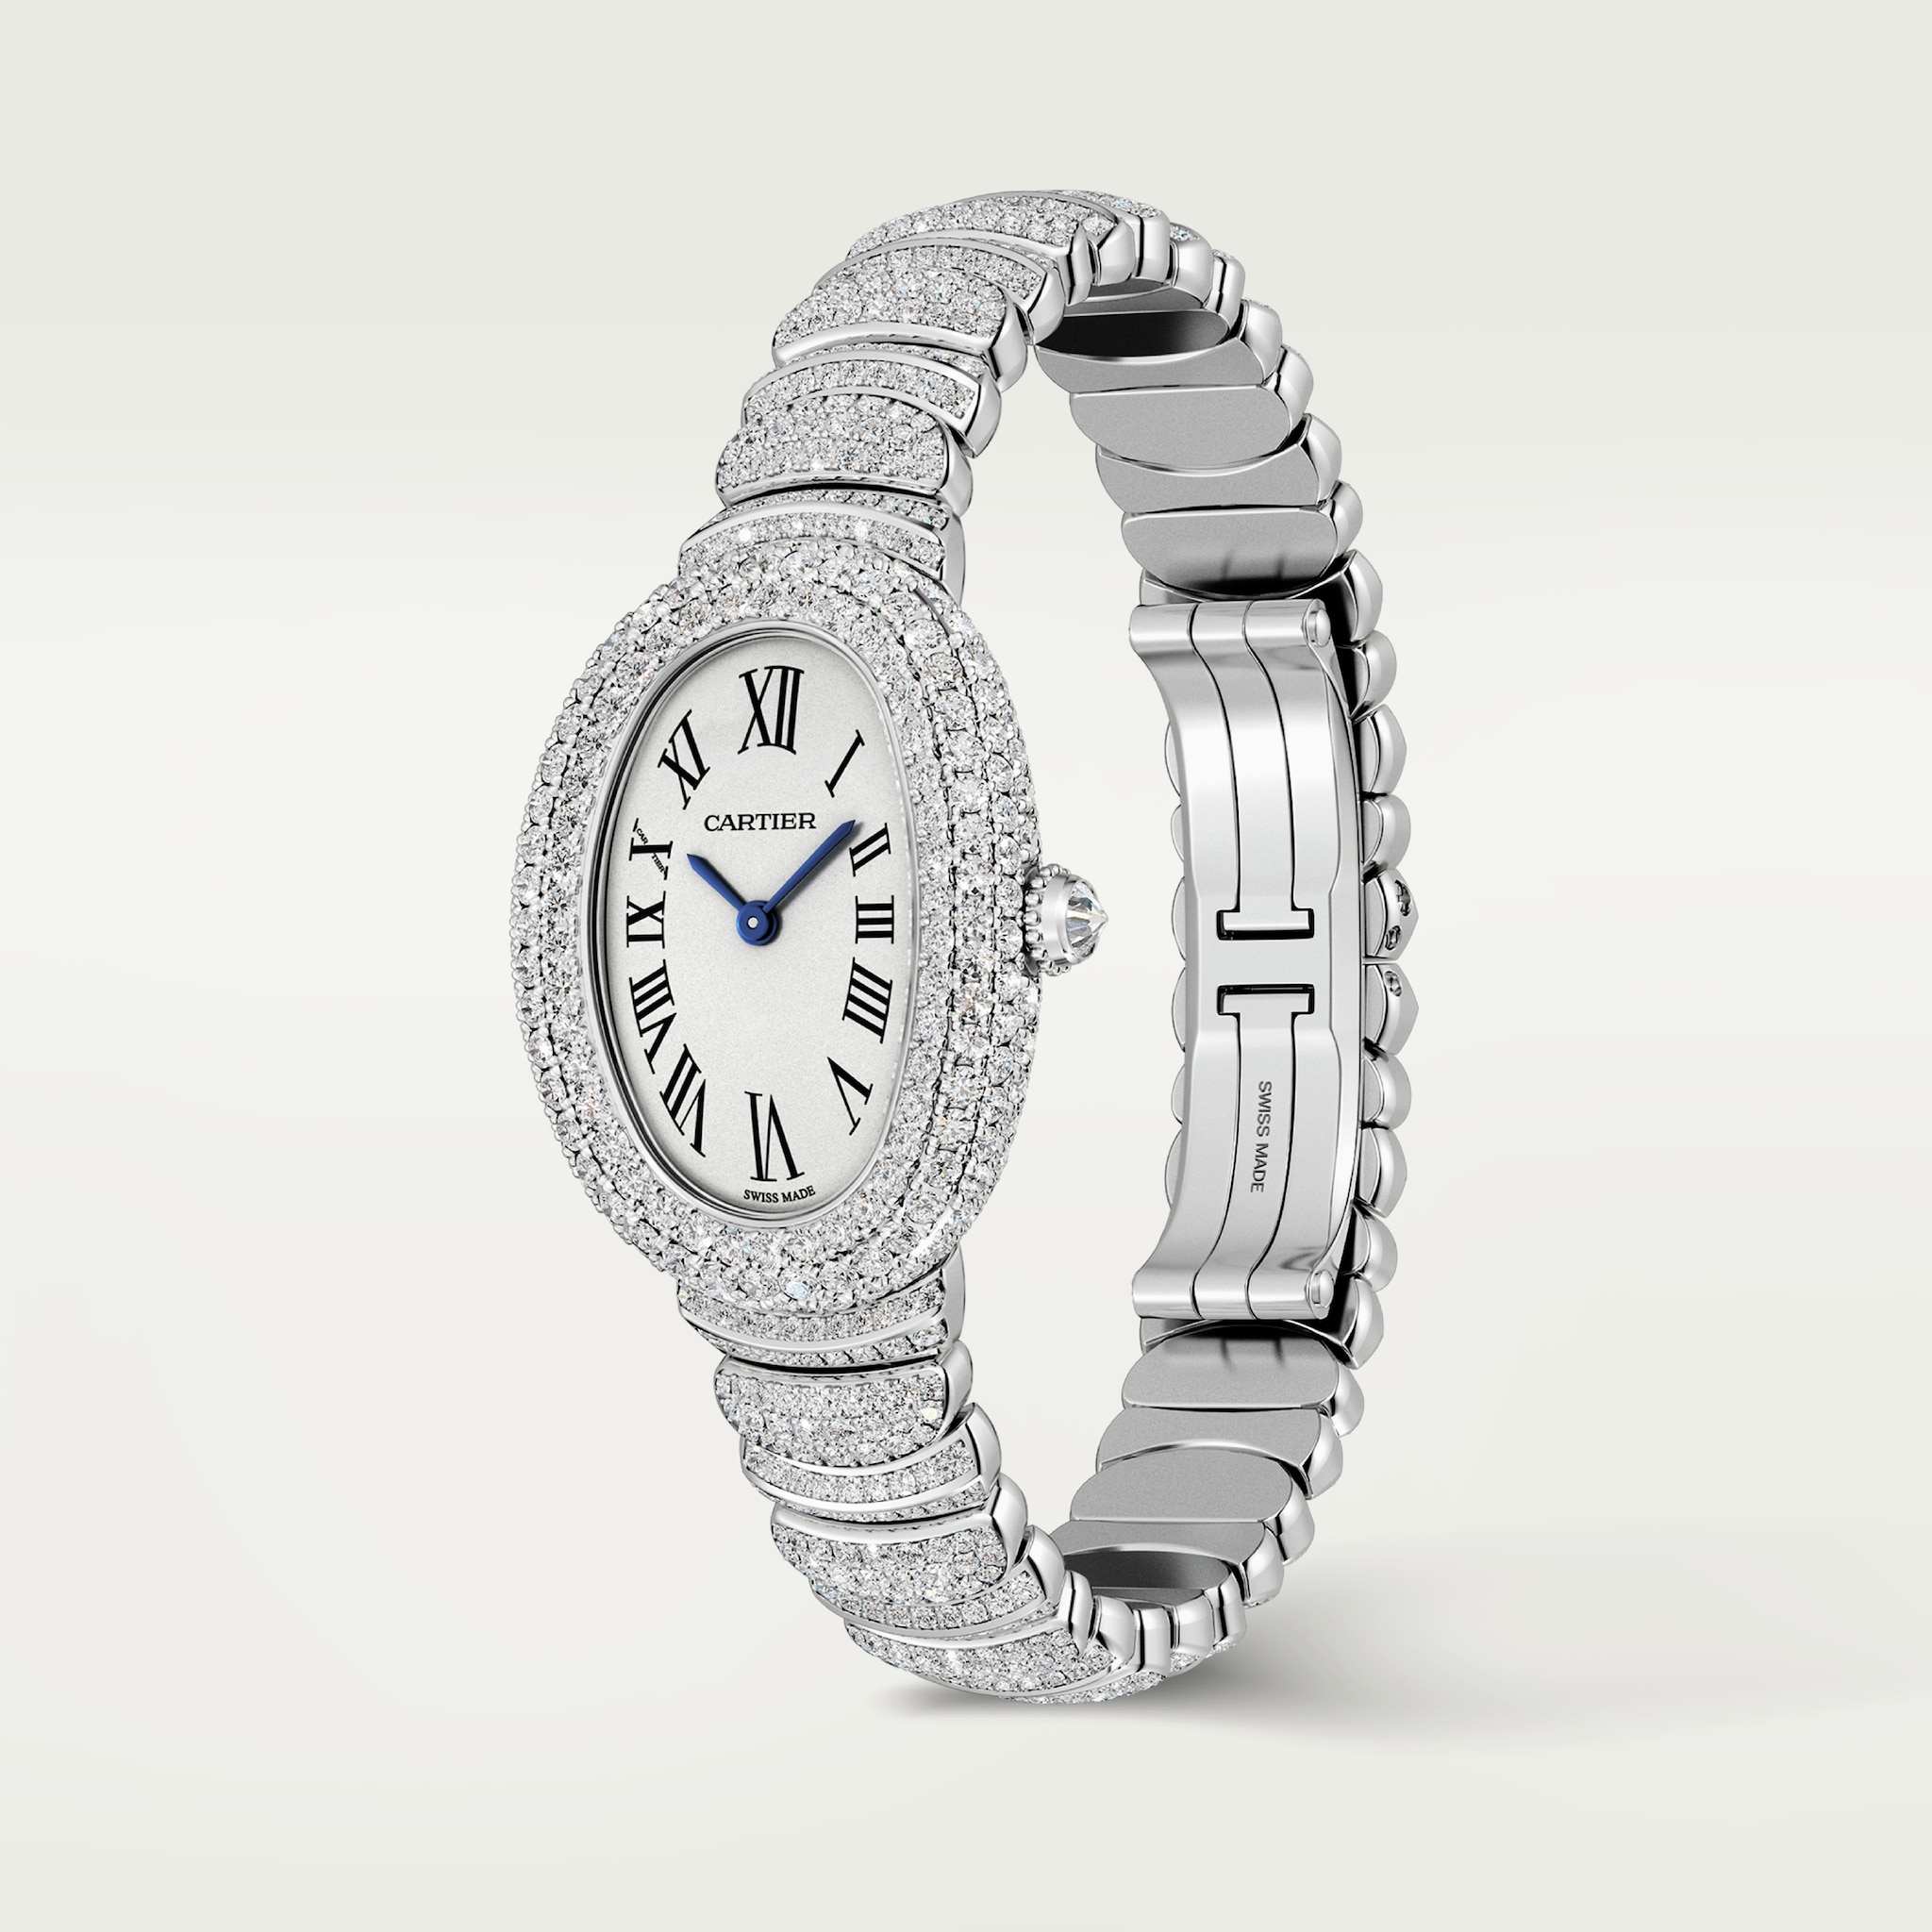 Baignoire watchSmall model, quartz movement, white gold, diamonds